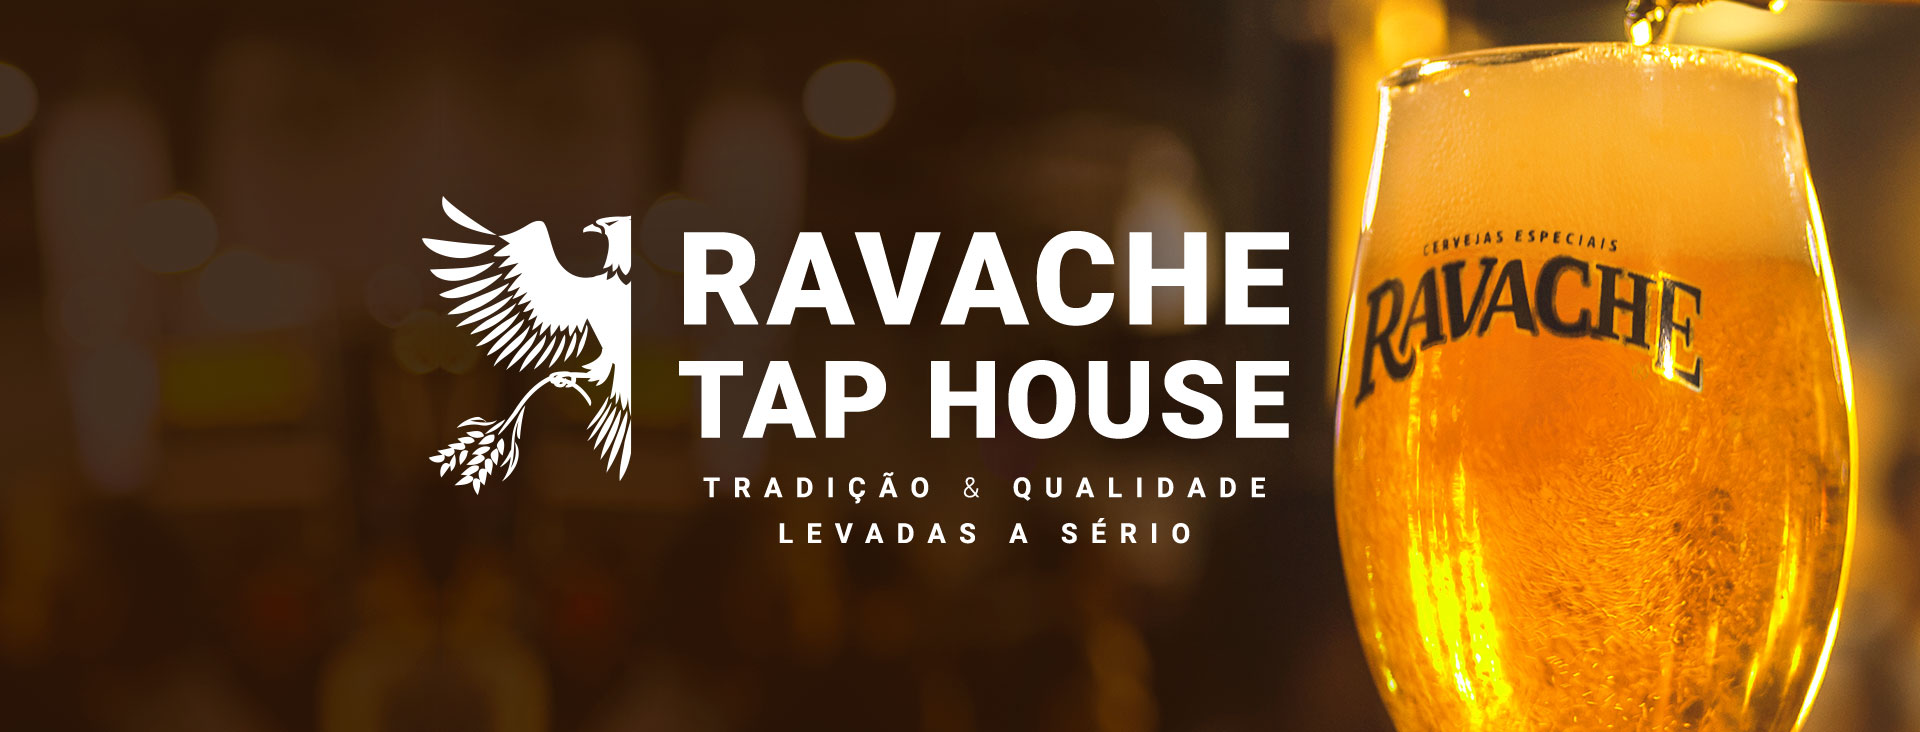 Tap House Ravache